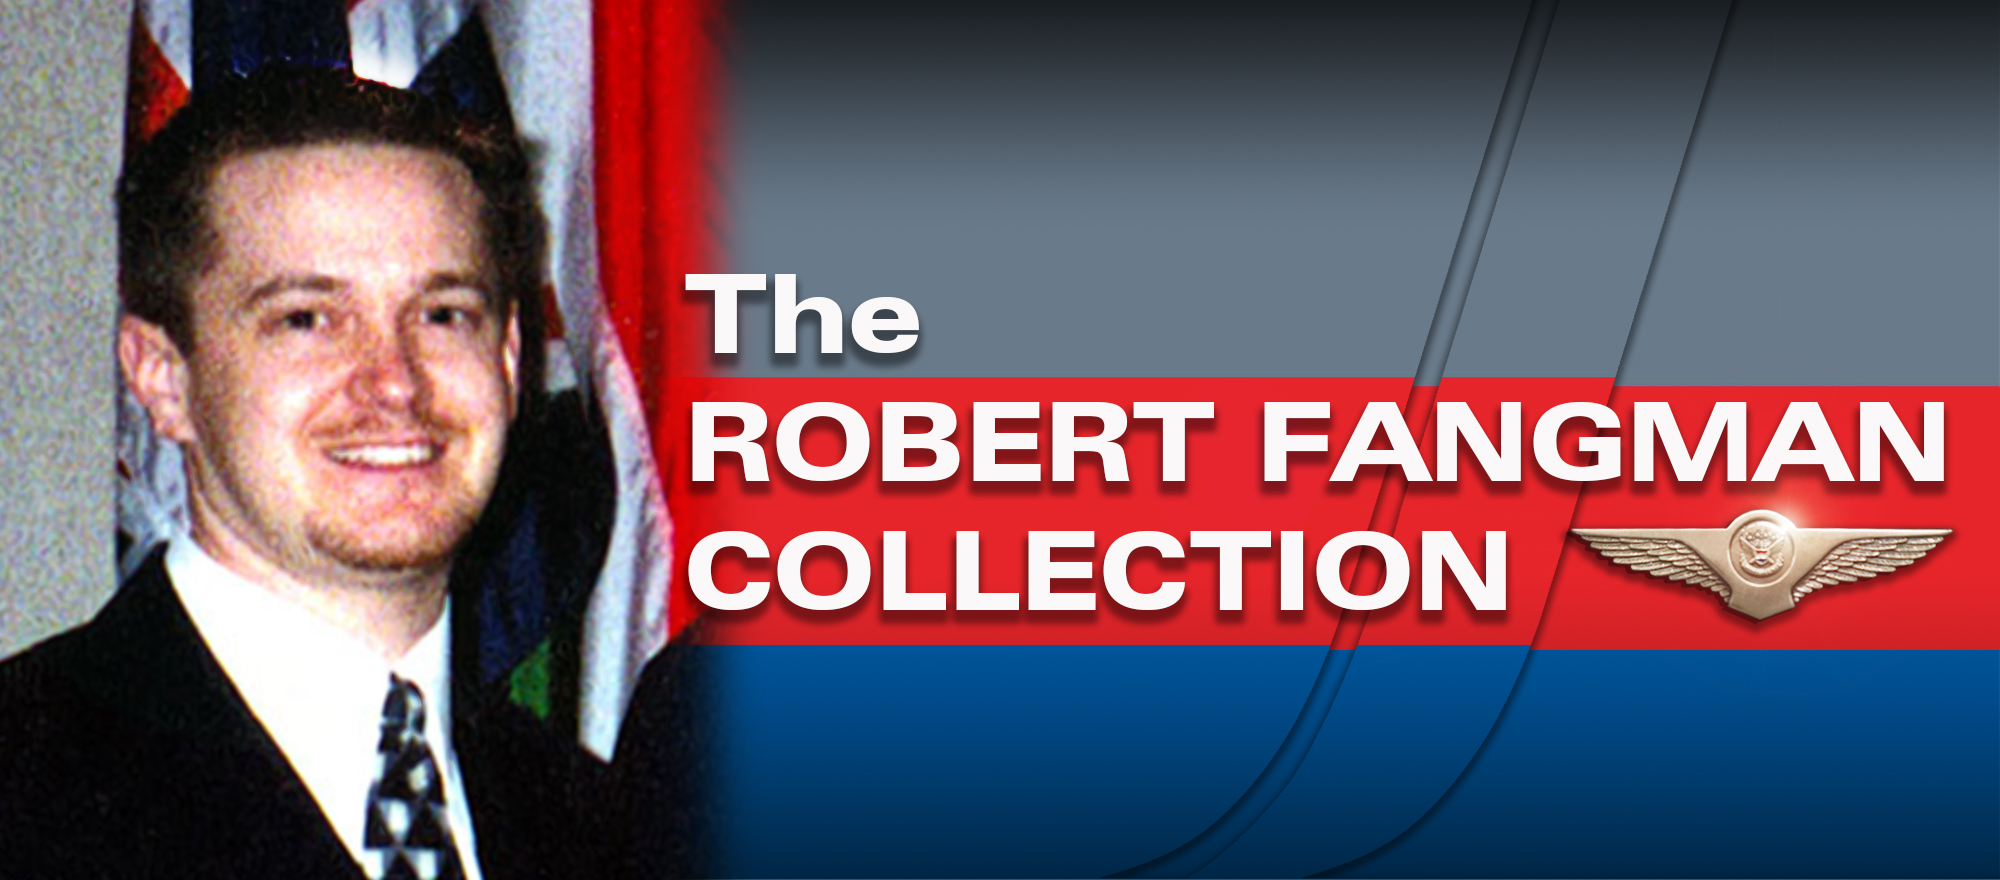 The Robert Fangman Collection